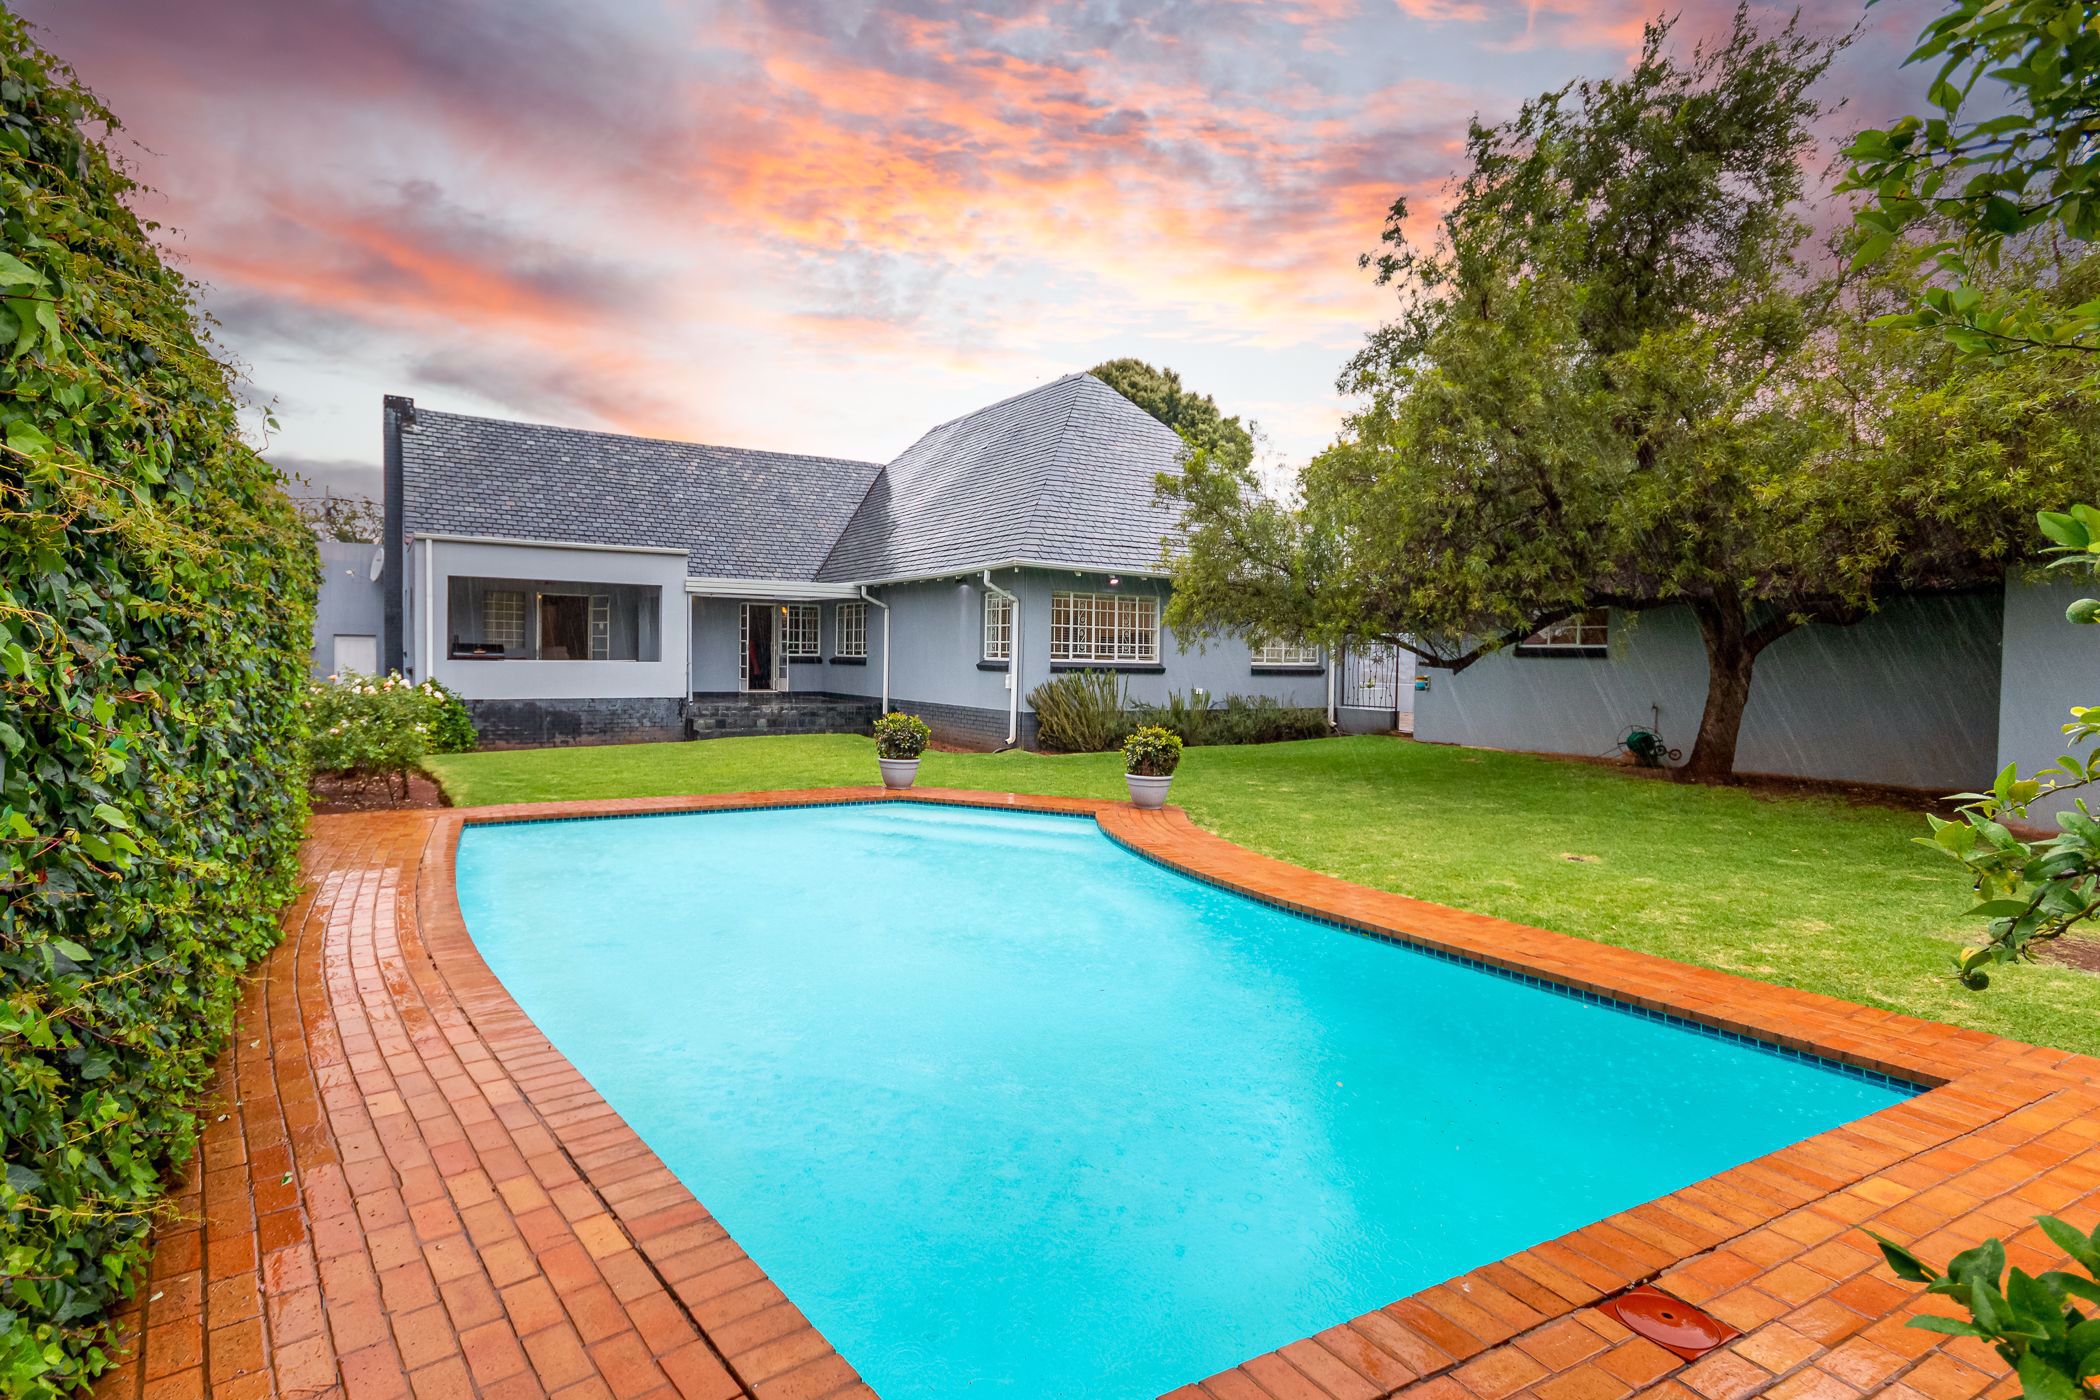 4 bedroom house for sale in Greenside (Johannesburg)